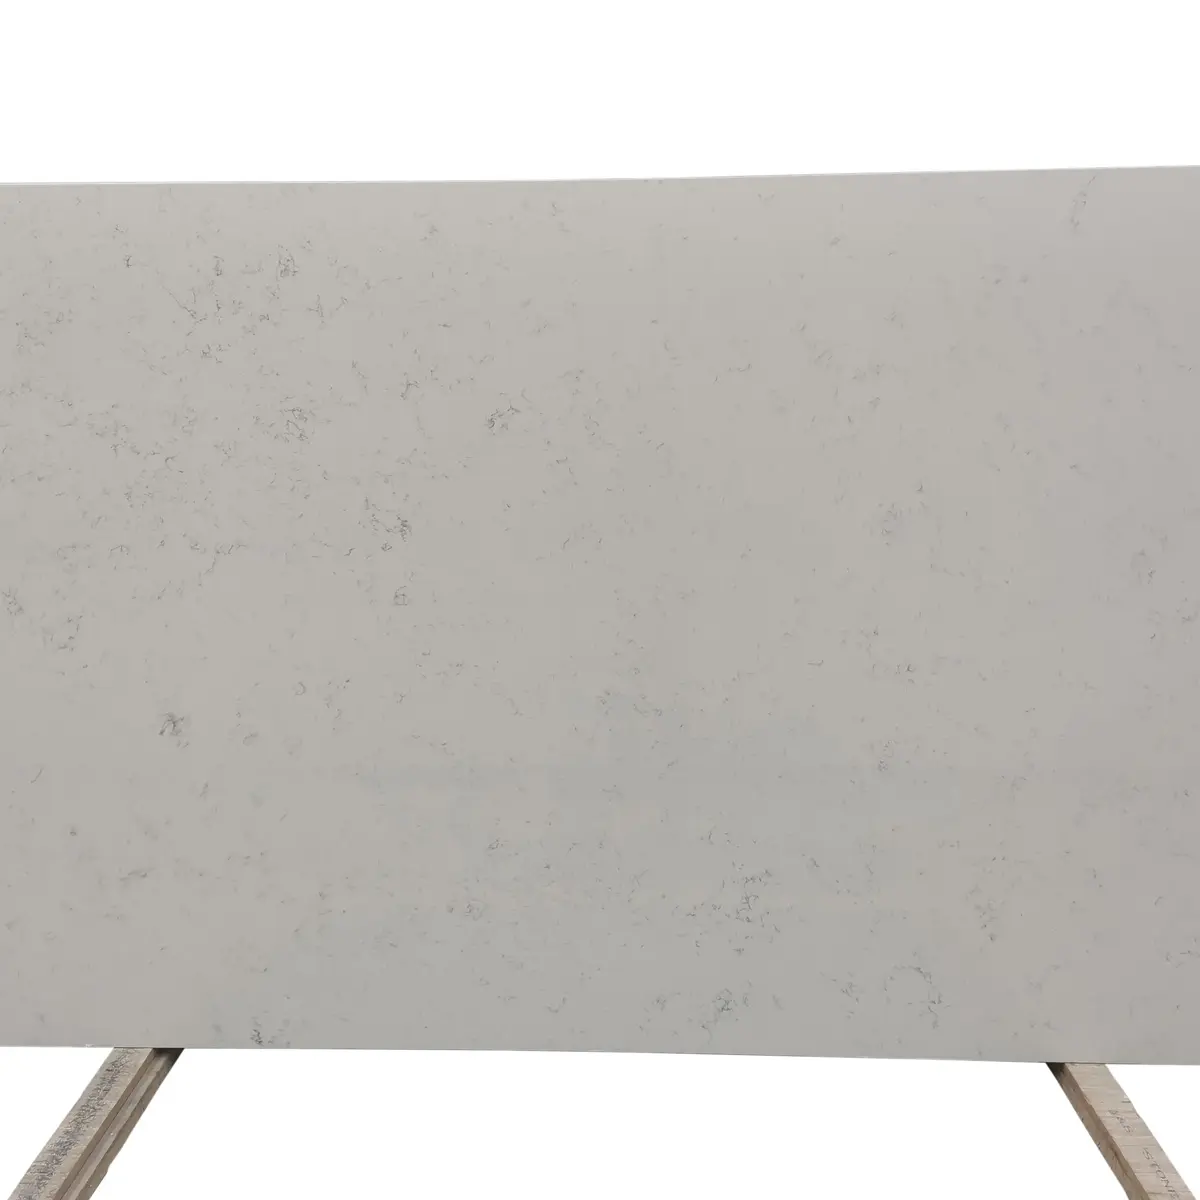 Polished Surface Artificial Carrara White Quartz Stone Slabs For Countertops Price